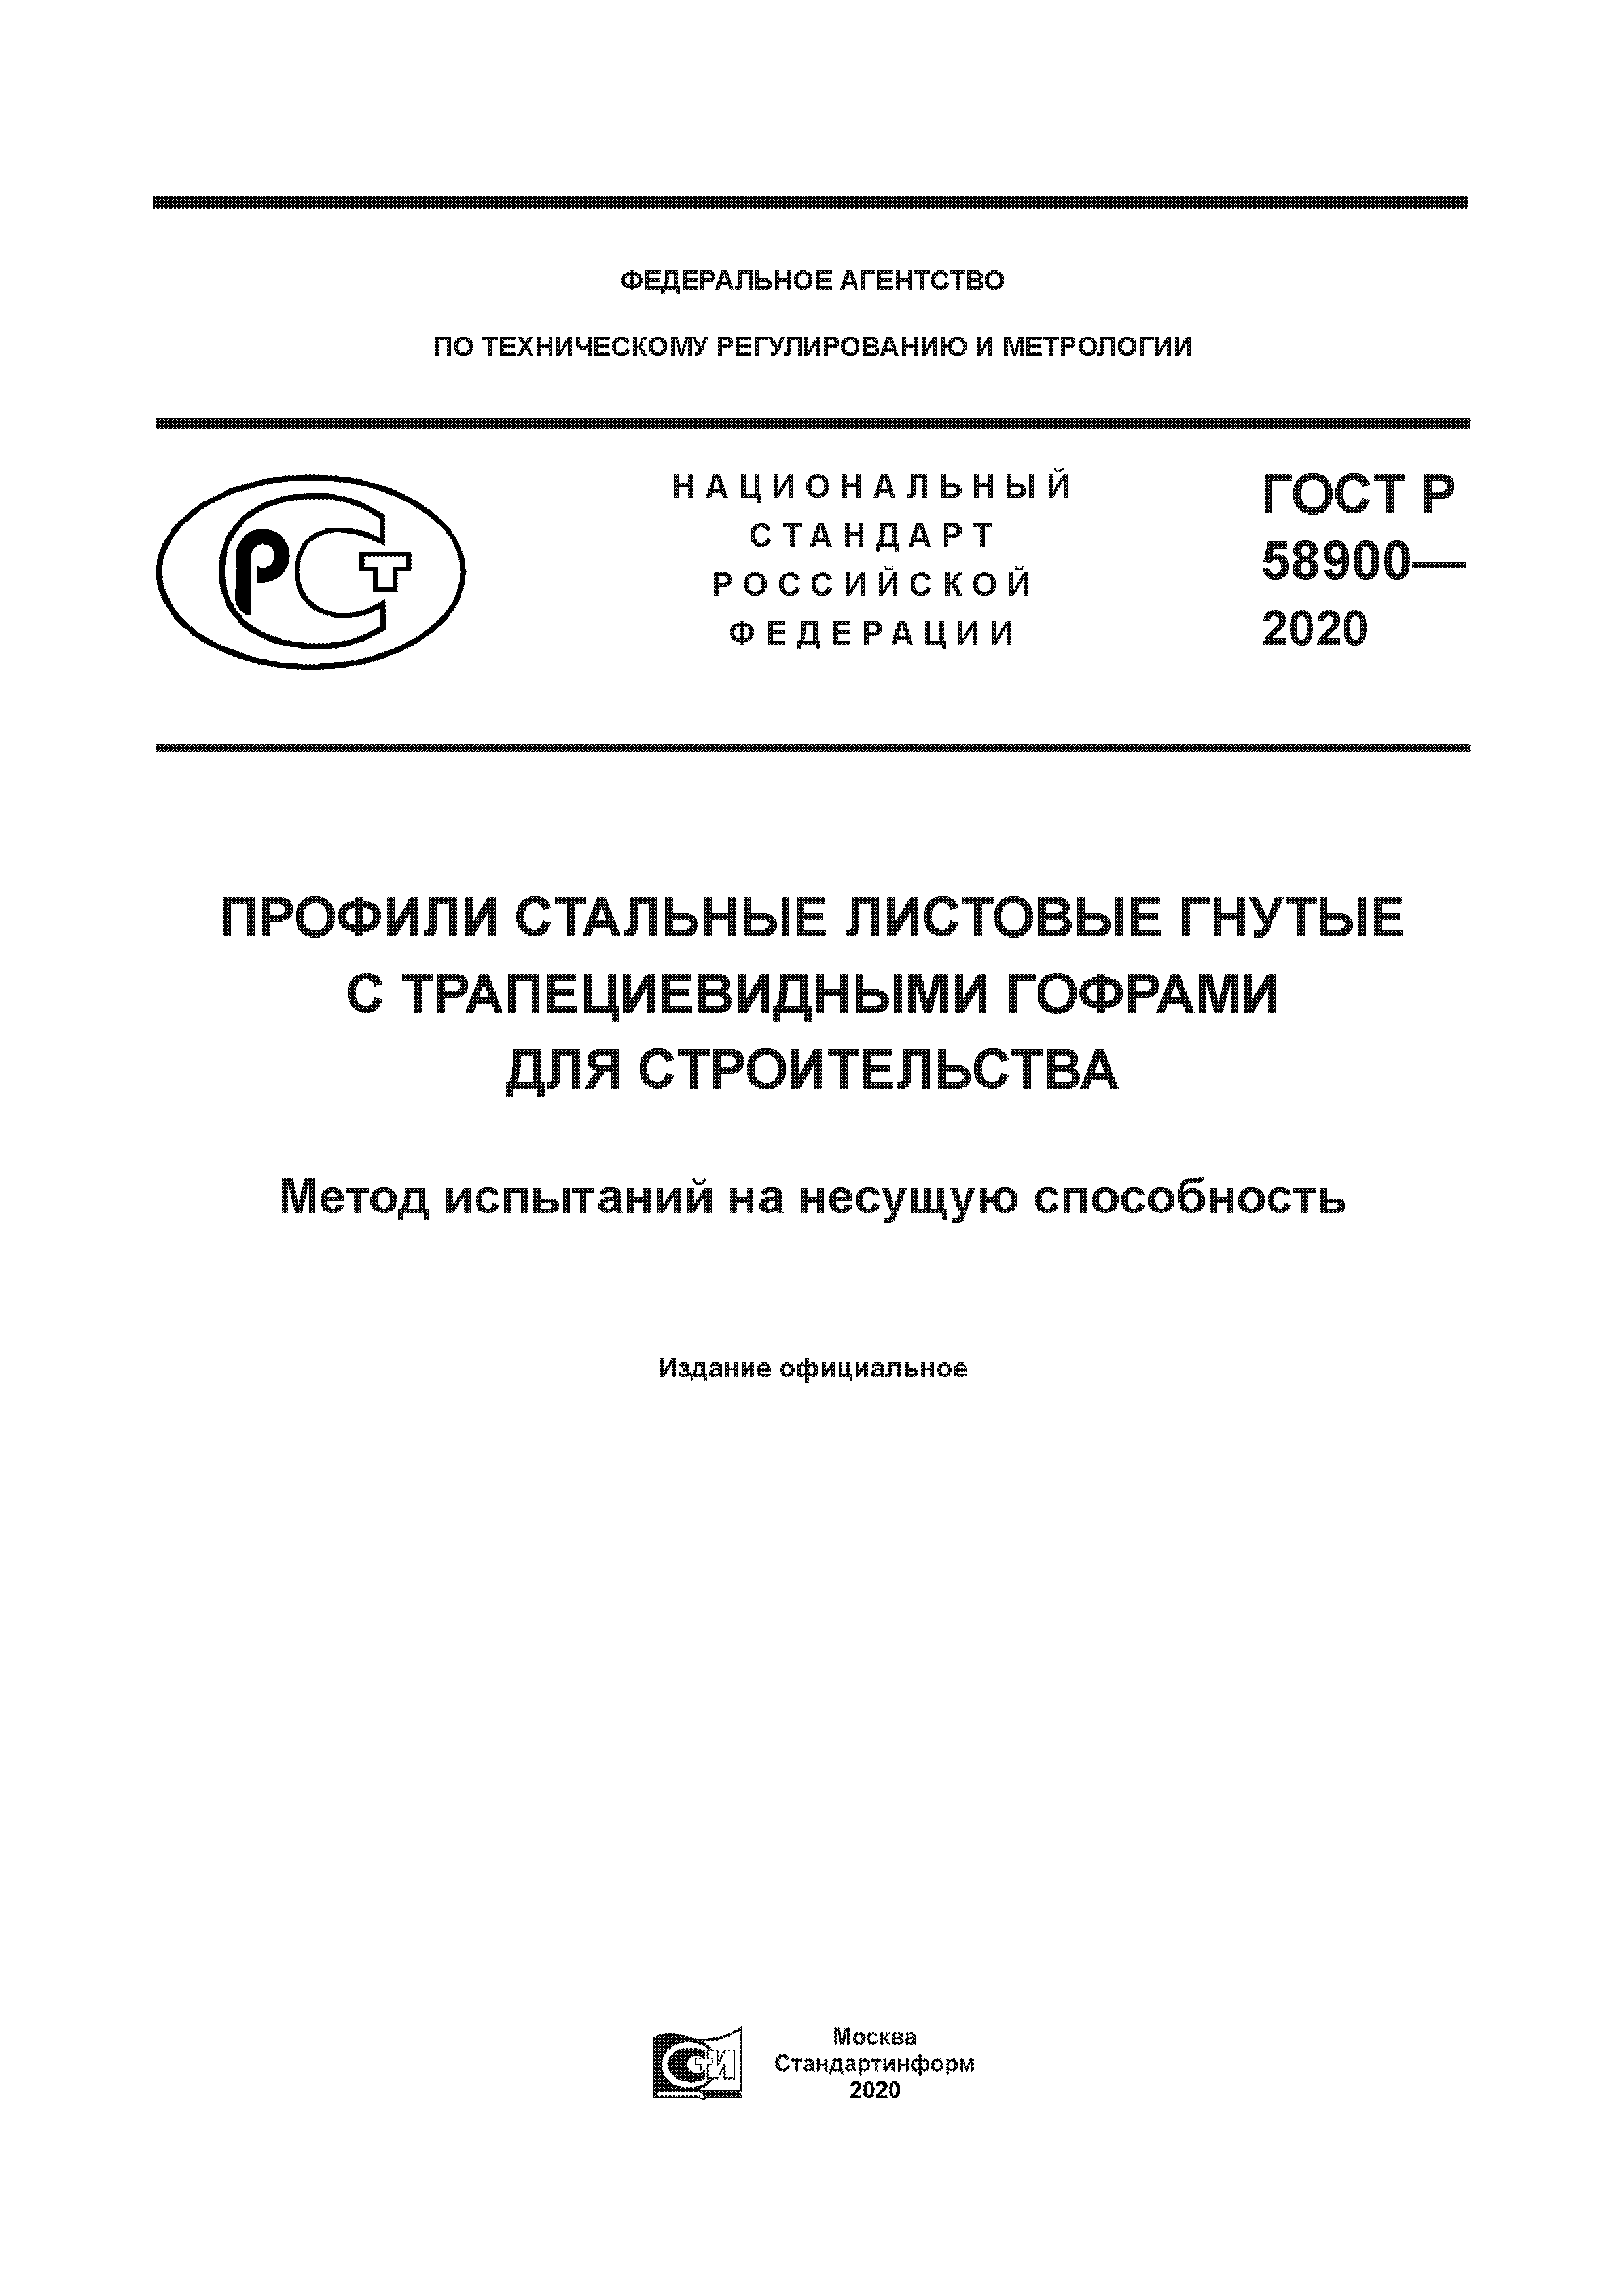 ГОСТ Р 58900-2020